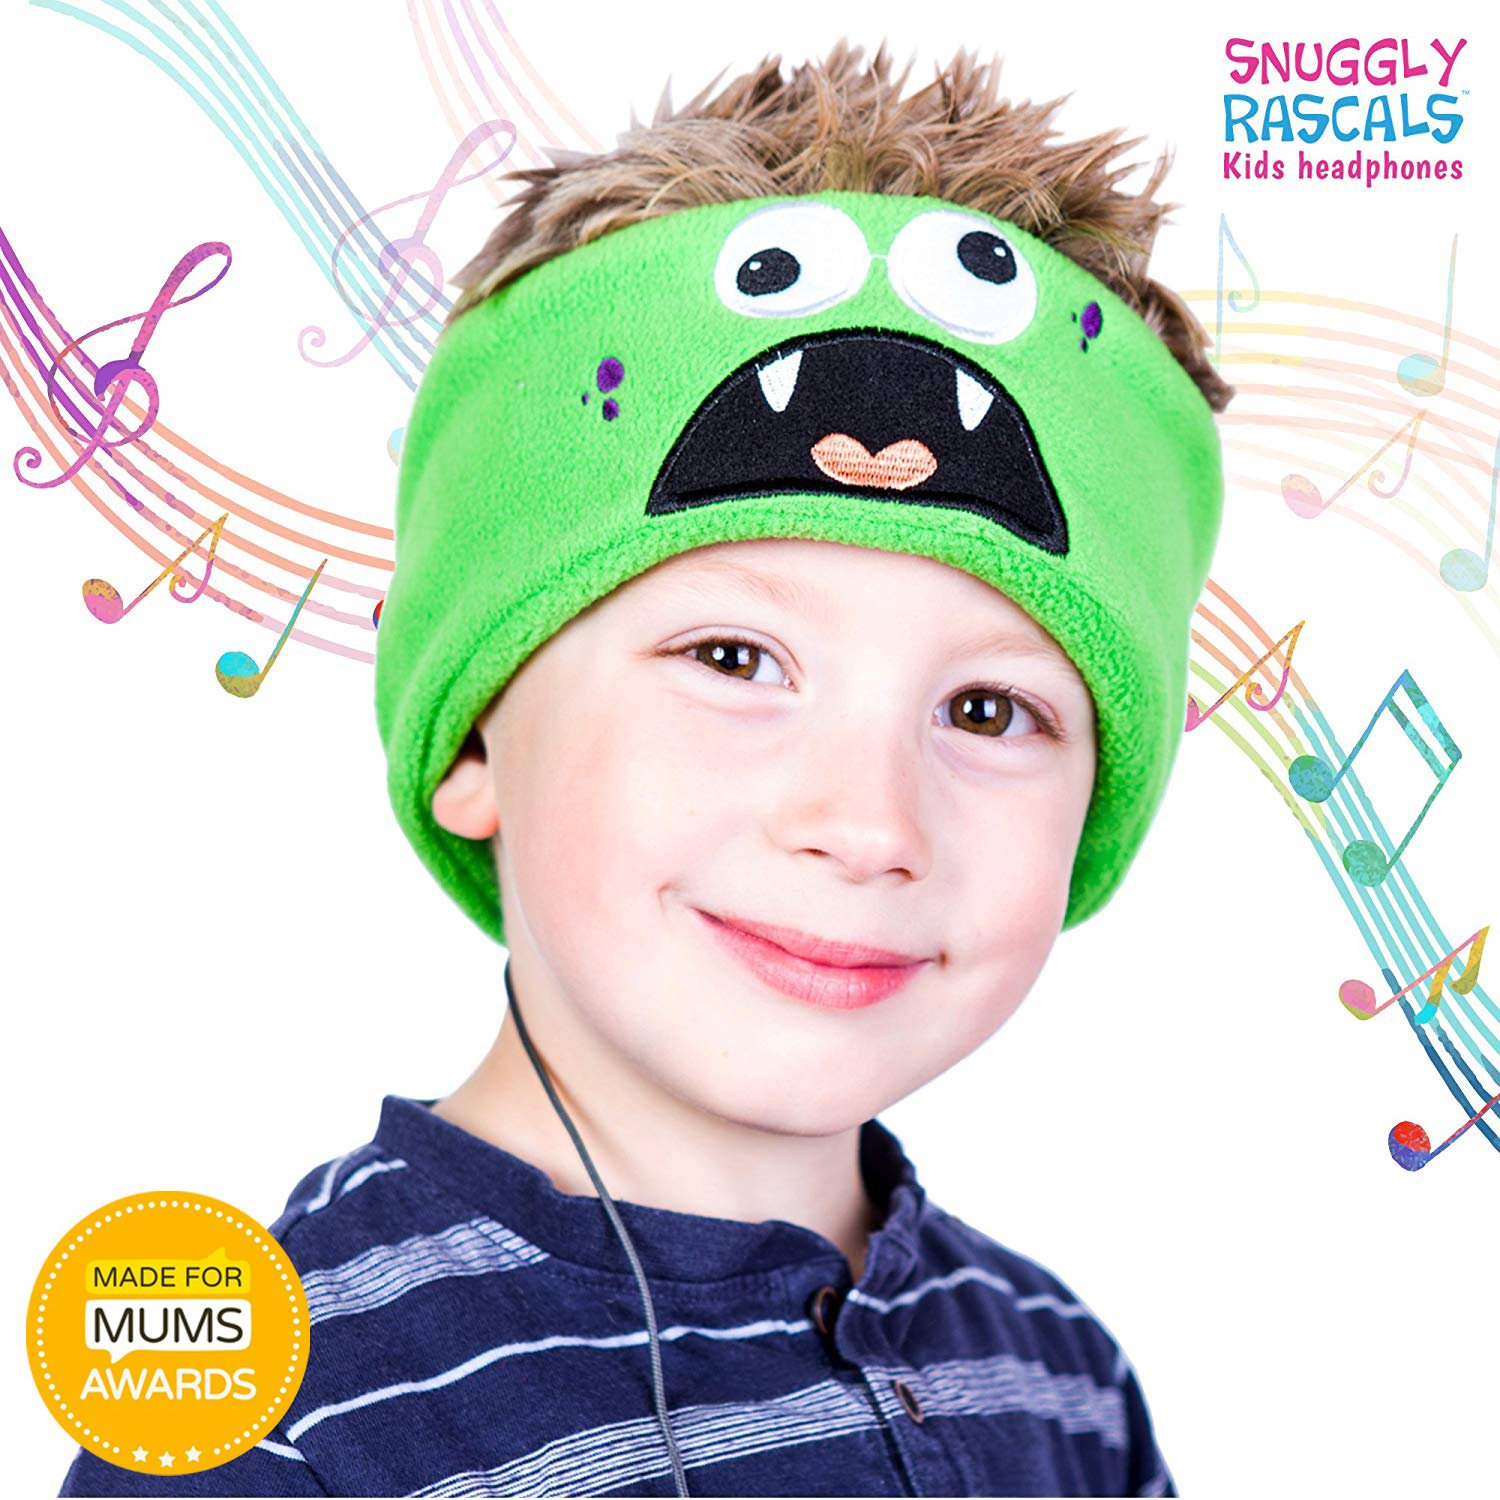 Snuggly Rascals Monster Kids Headphones Review